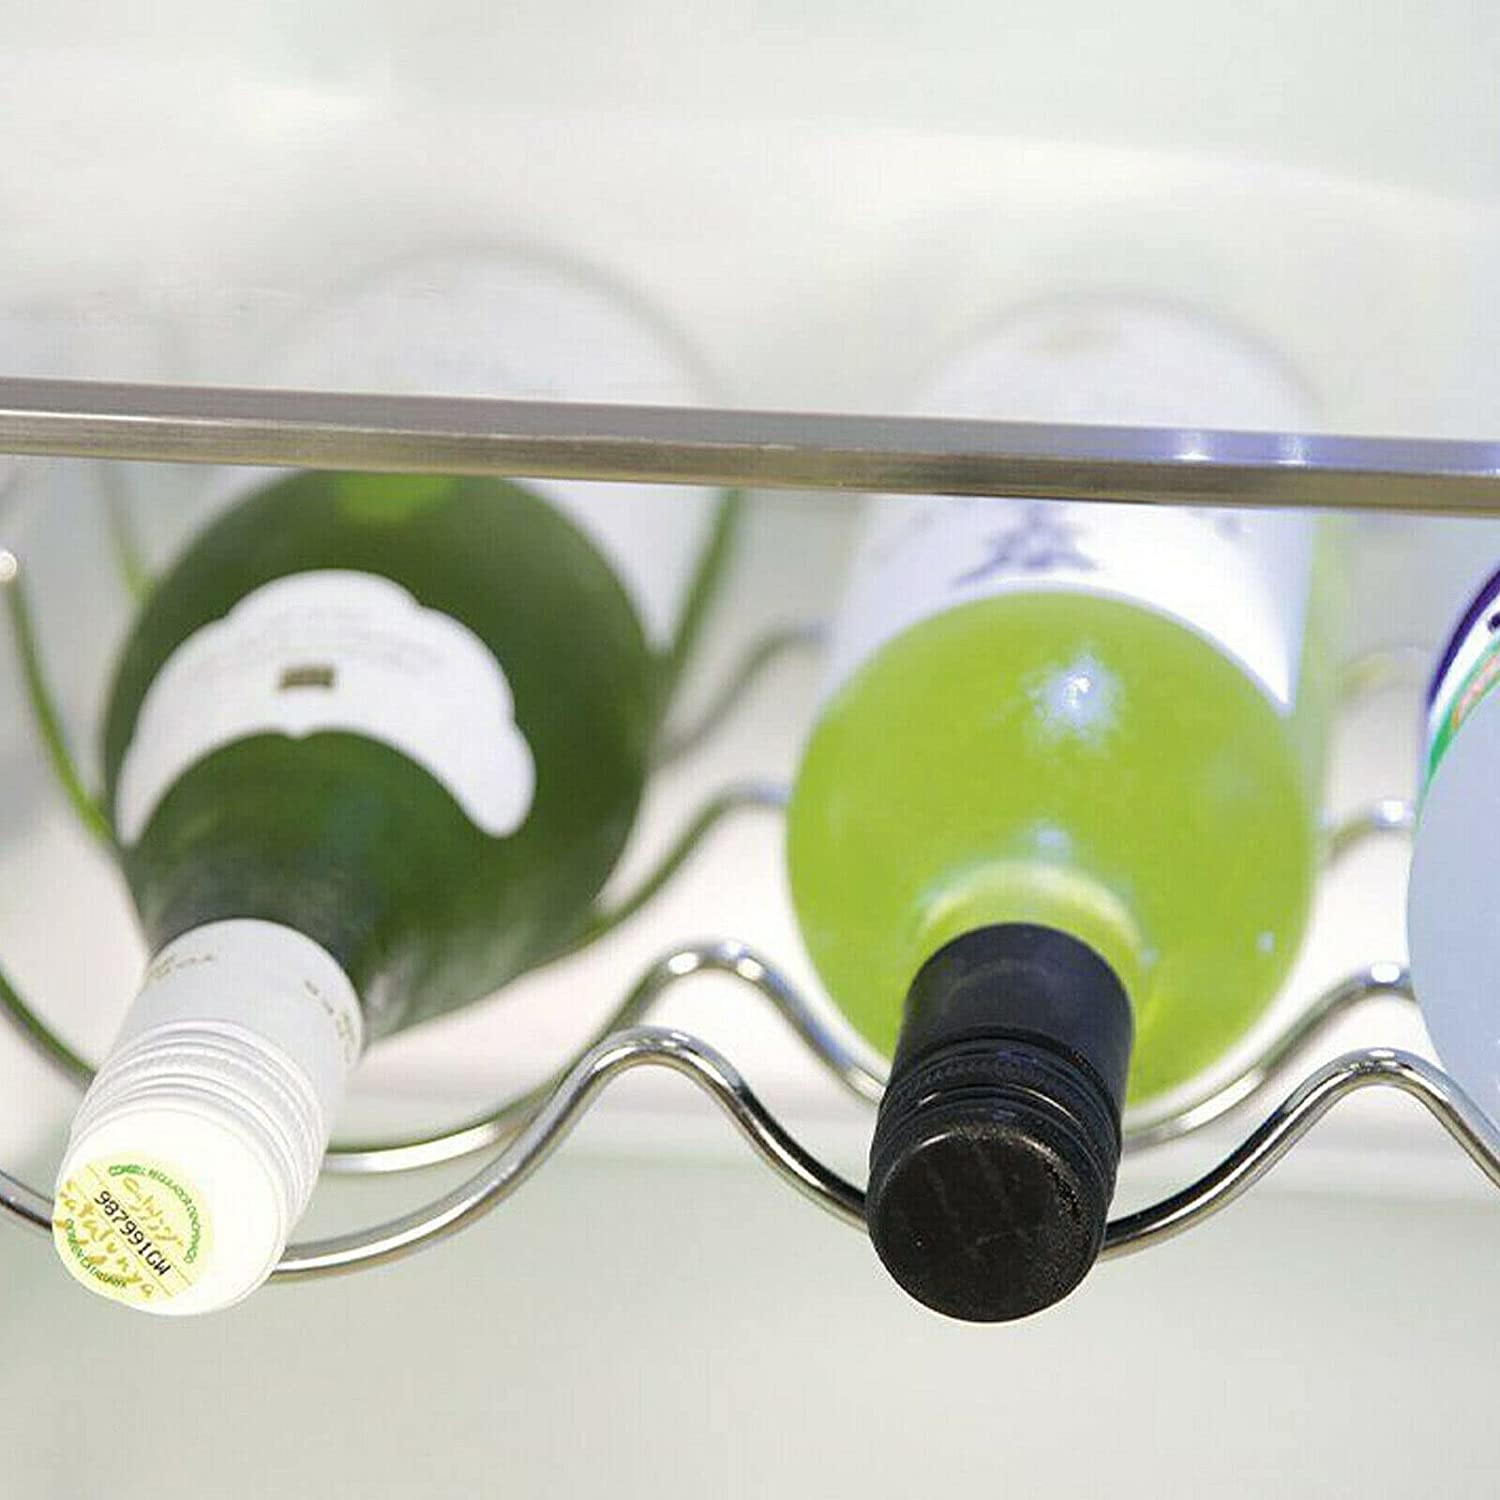 Wine Bottle Rack Shelf Insert compatible with Indesit Fridge (460 x 290 x 70mm)